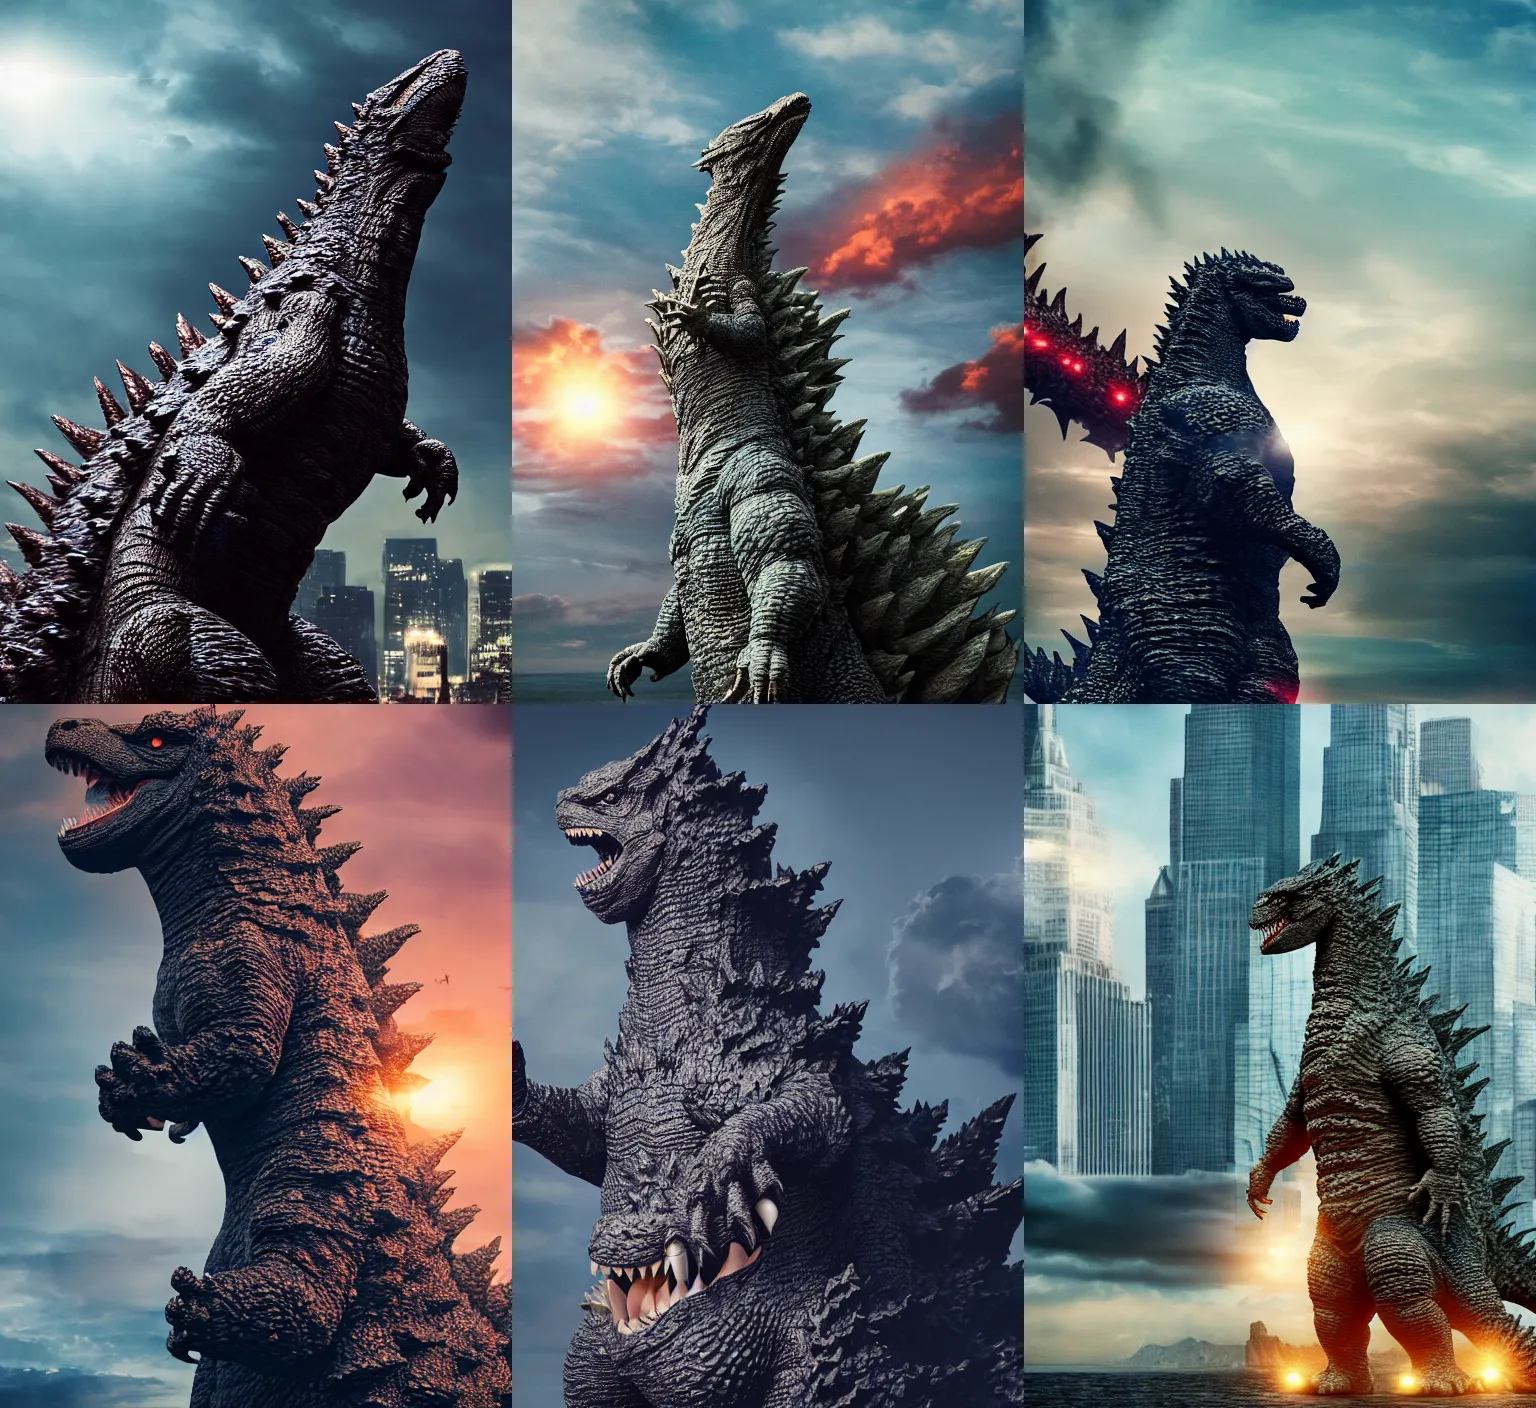 Prompt: Godzilla wearing light summer dress, cinematic, professional studio photography, 8k resolution